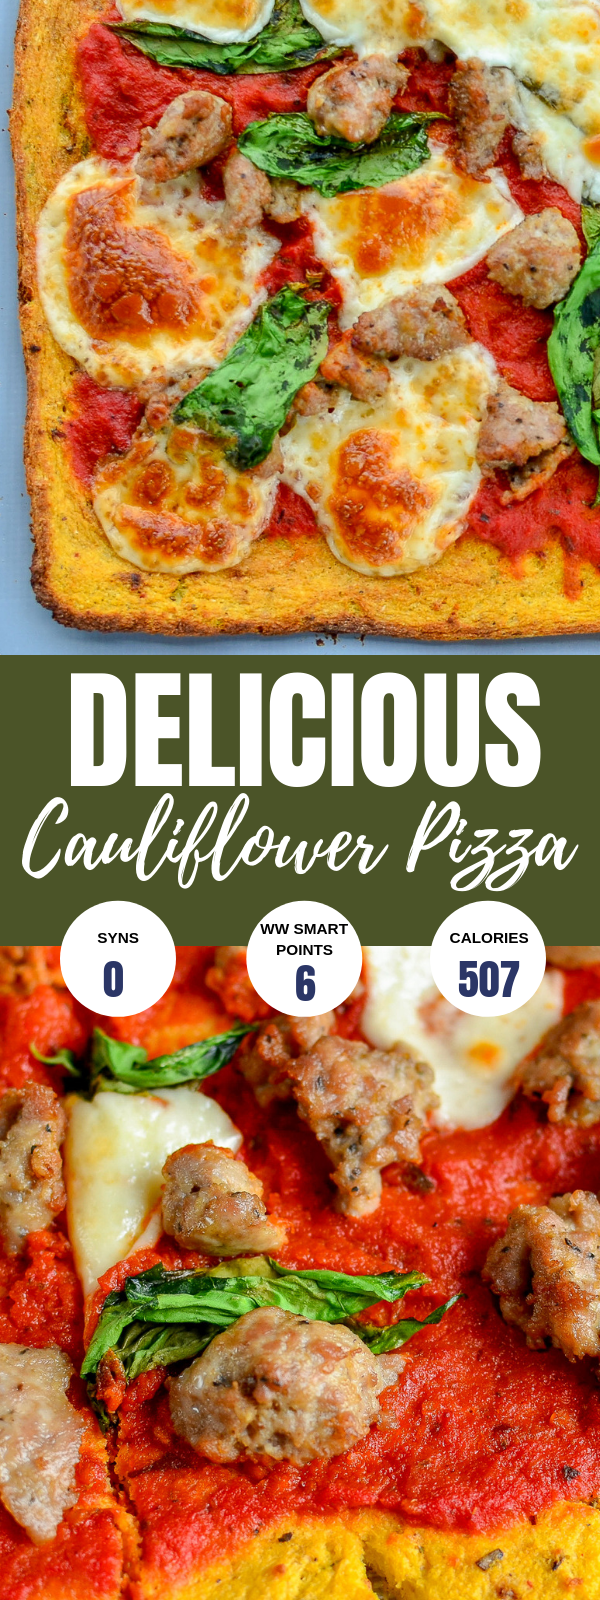 cauliflower pizza pin